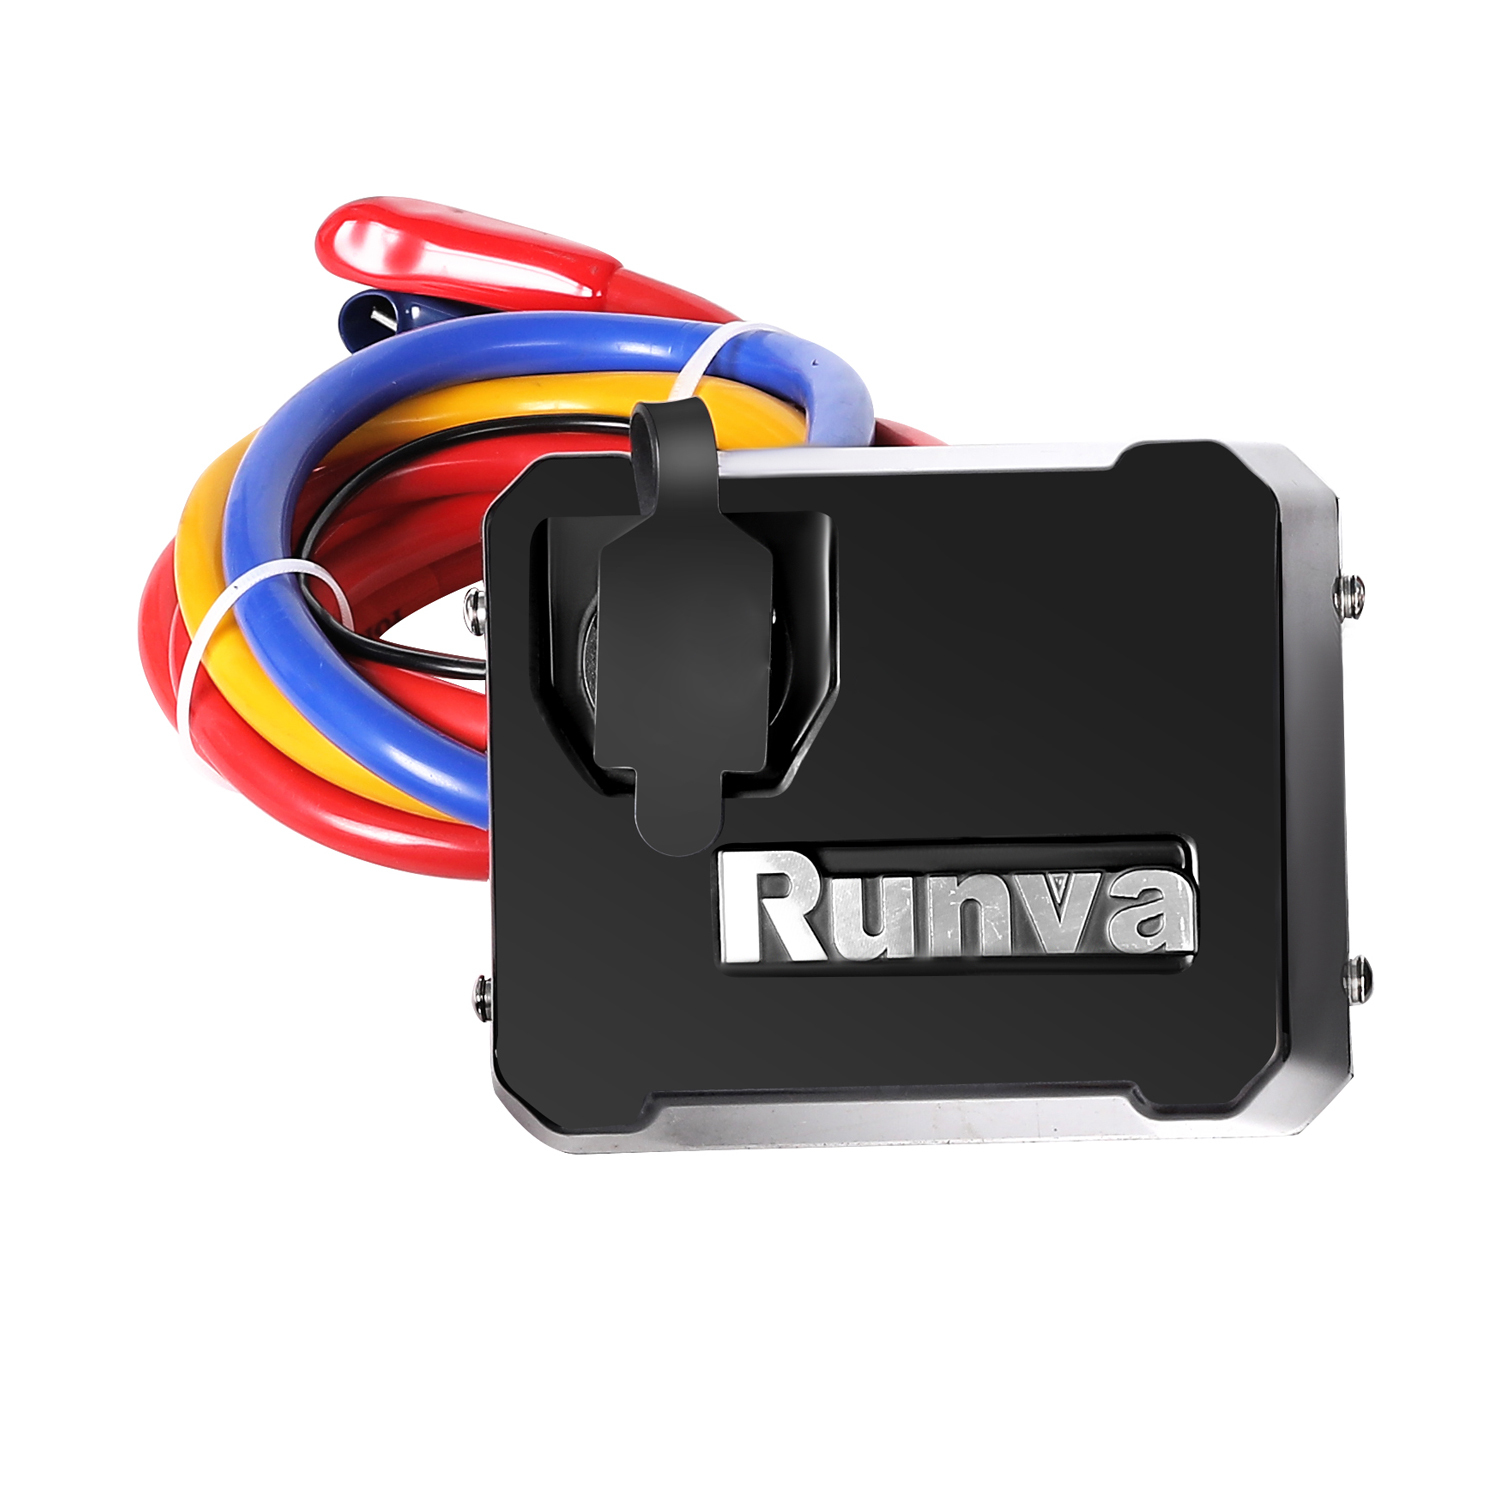 Runva Premium Series Complete 12V Control Box with Cables - Black